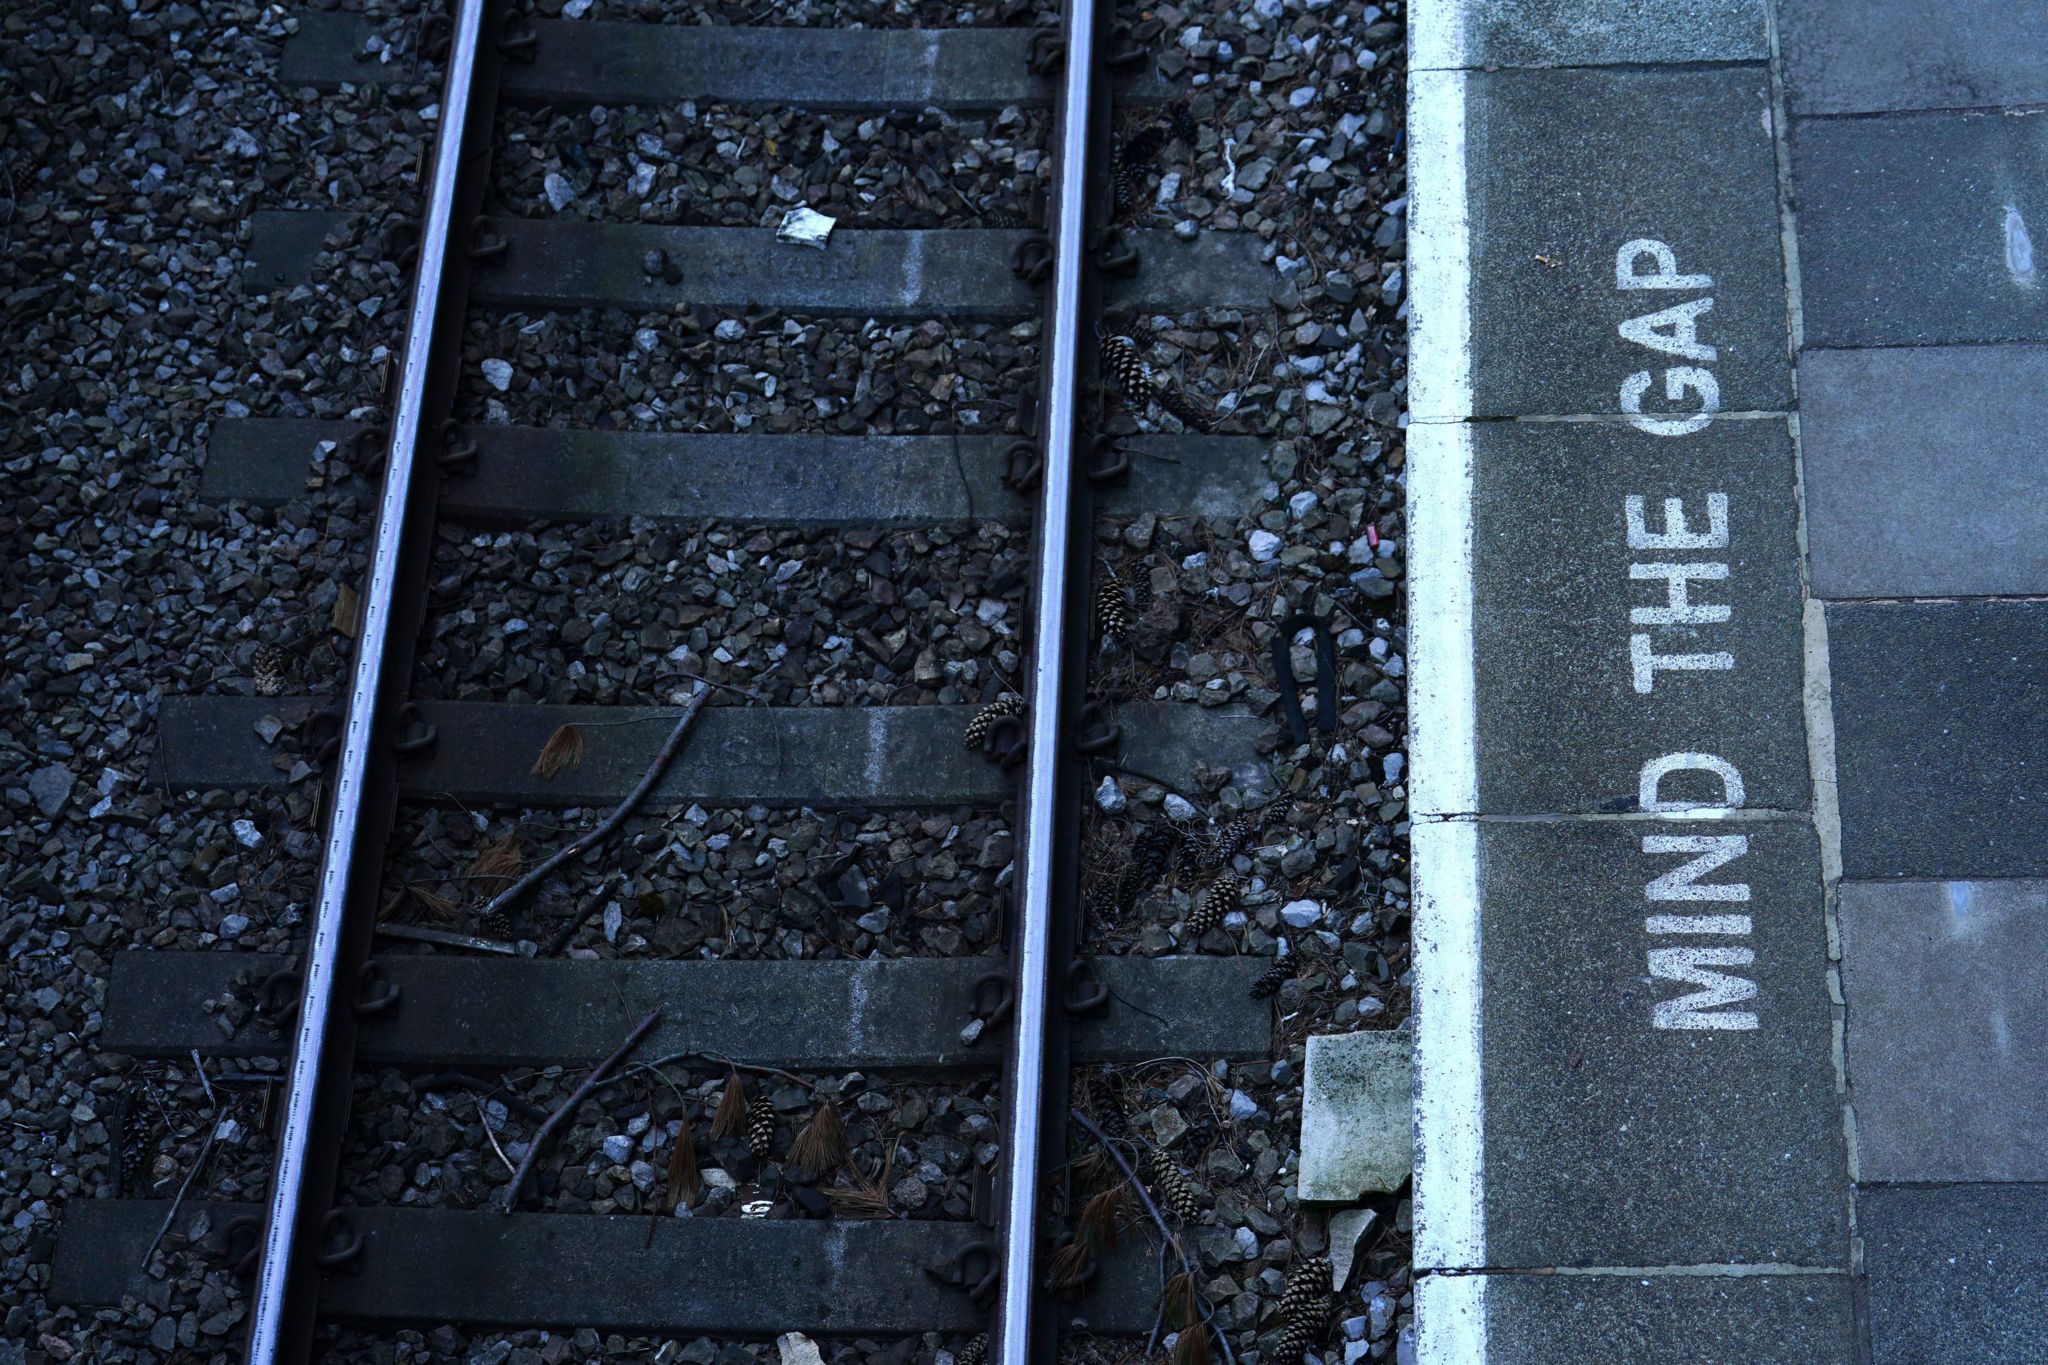 A "mind the gap" sign on a platform